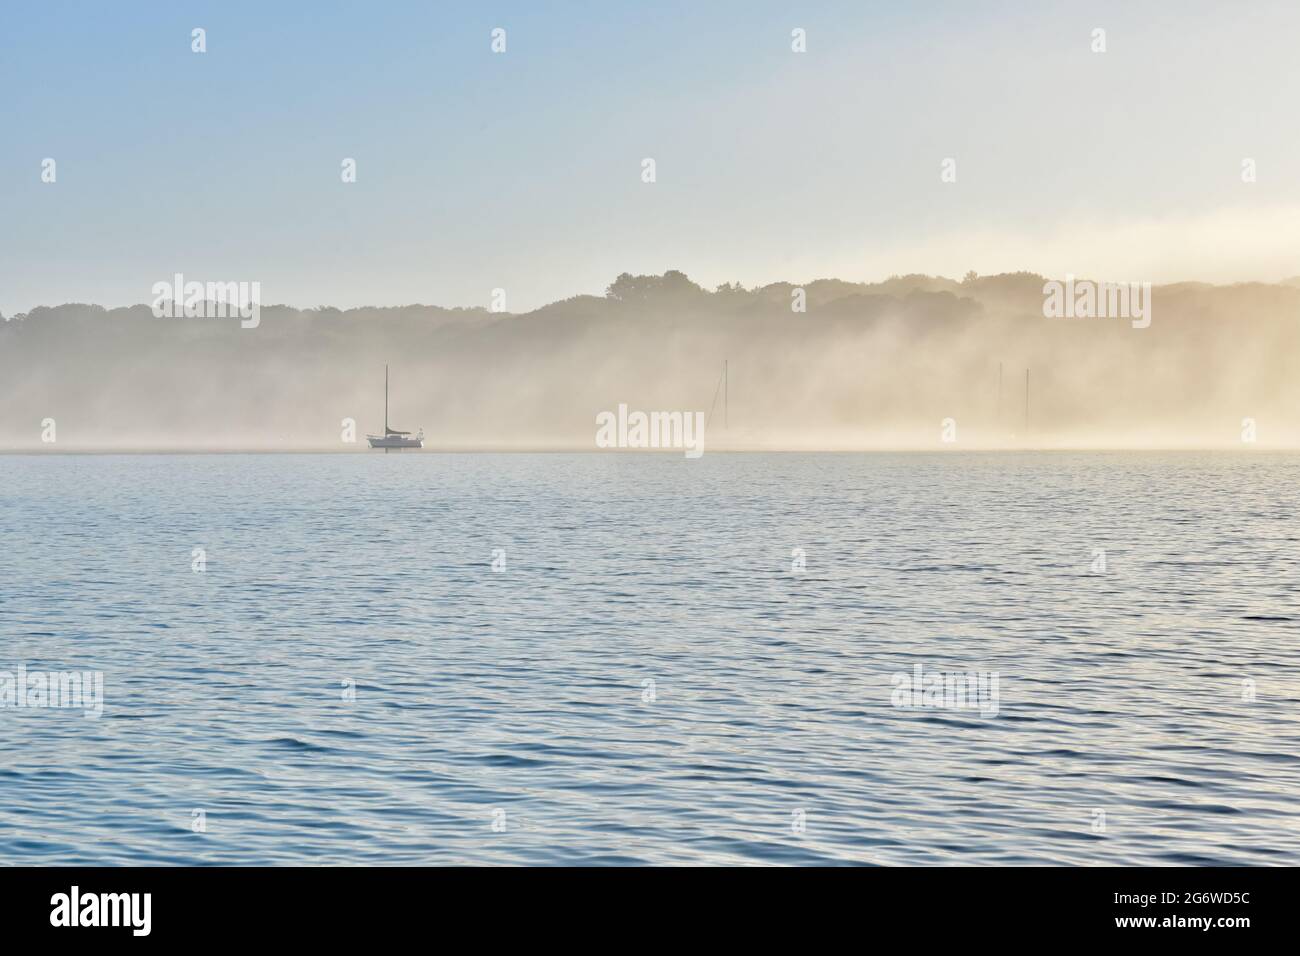 Segelboote im frühen Morgennebel in Port Jefferson Harbour, Long Island, NY. Kopierbereich. Stockfoto